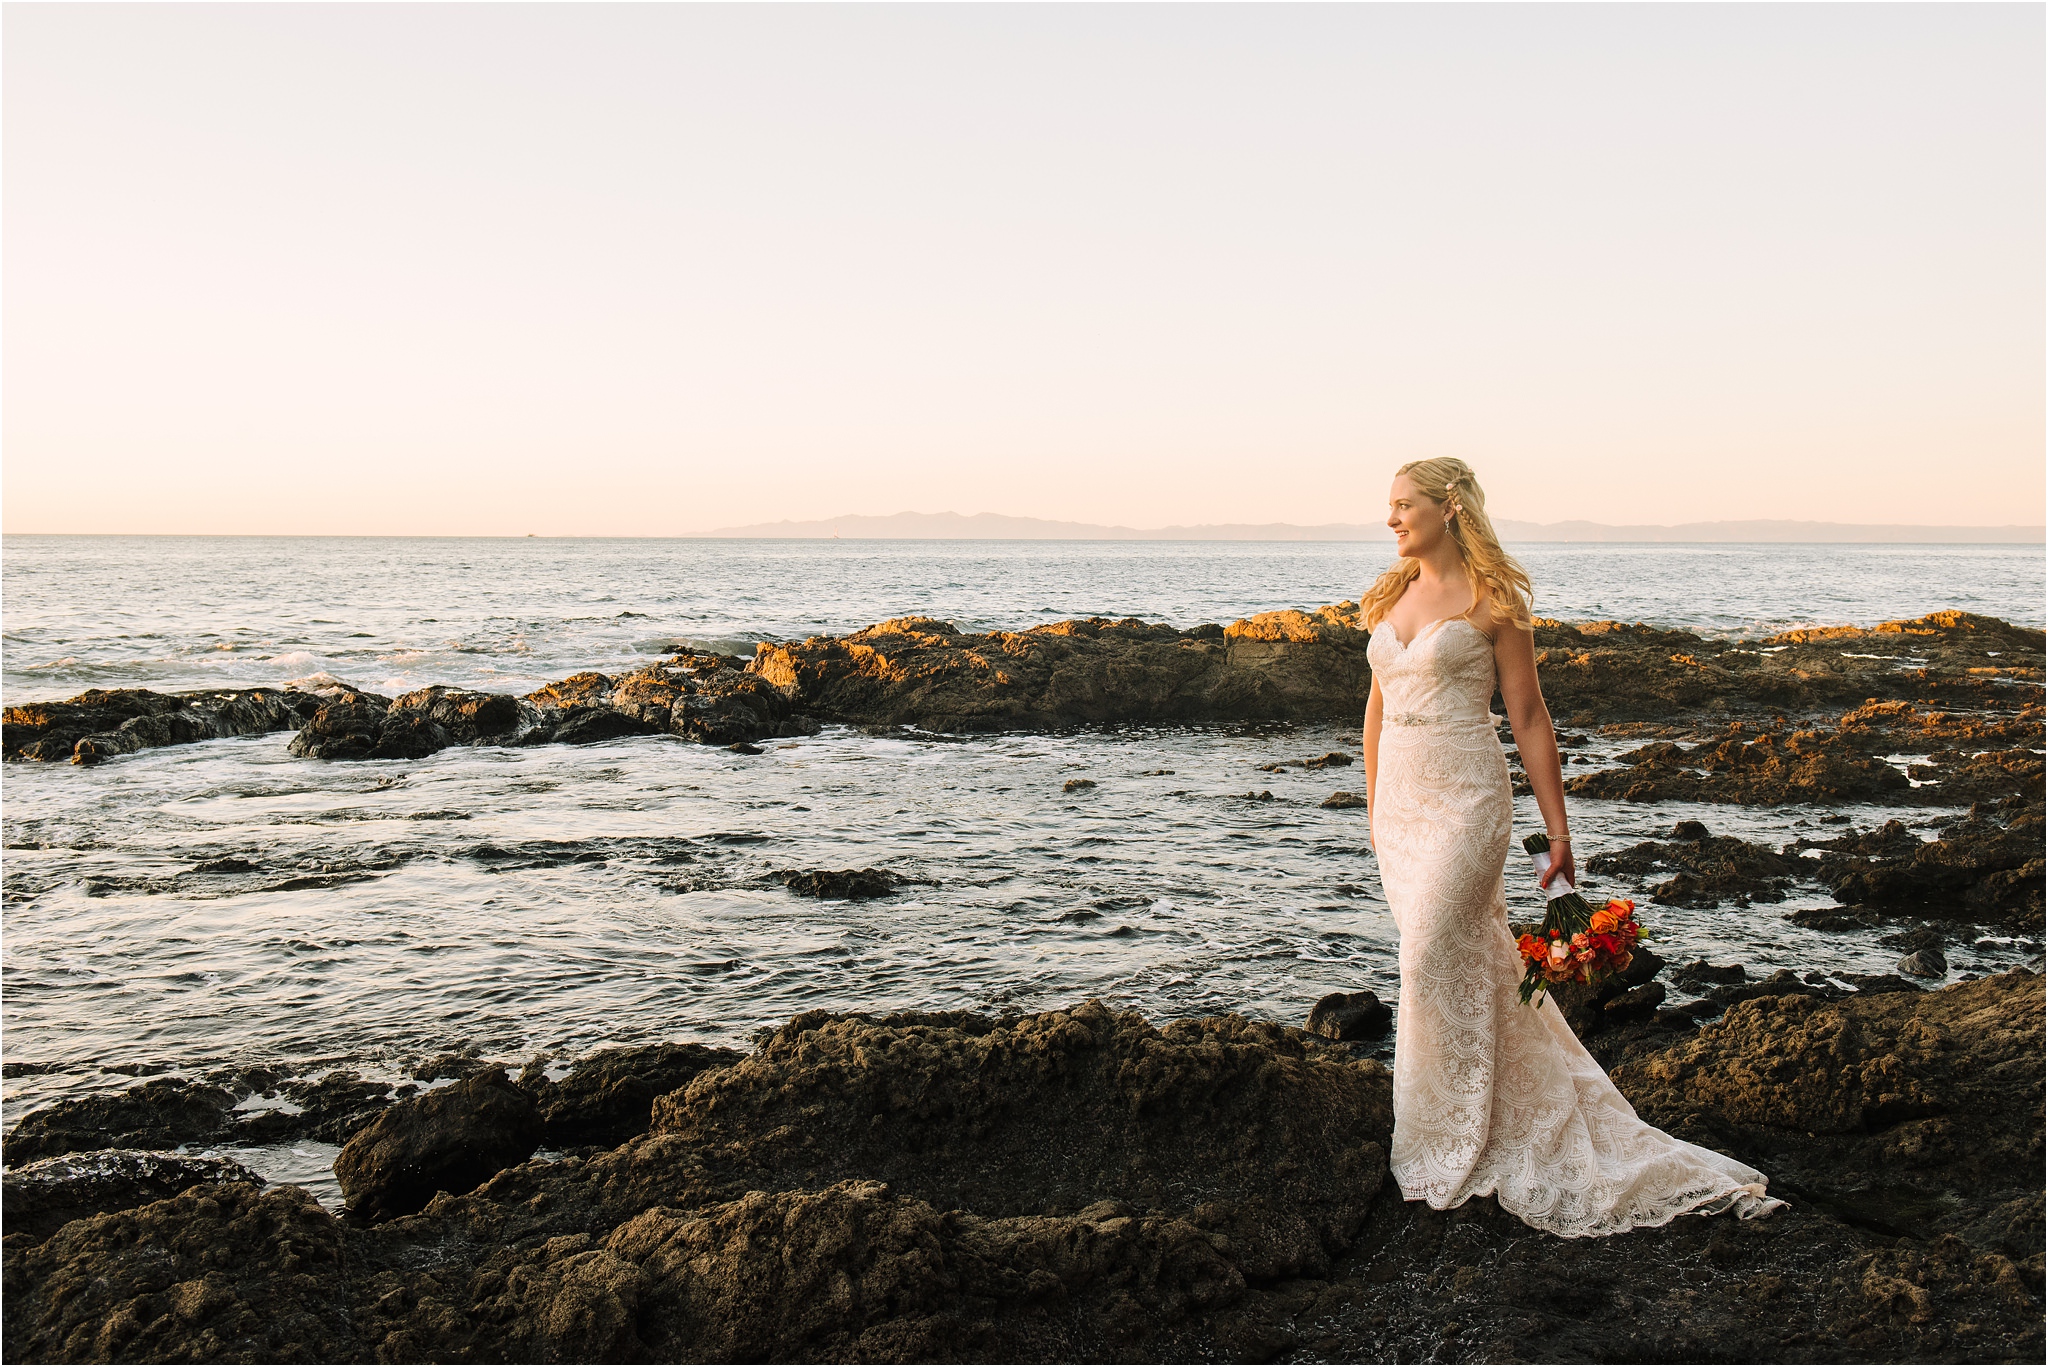 Beach Destination Wedding - Tessa & Ryan - Laura Alpizar